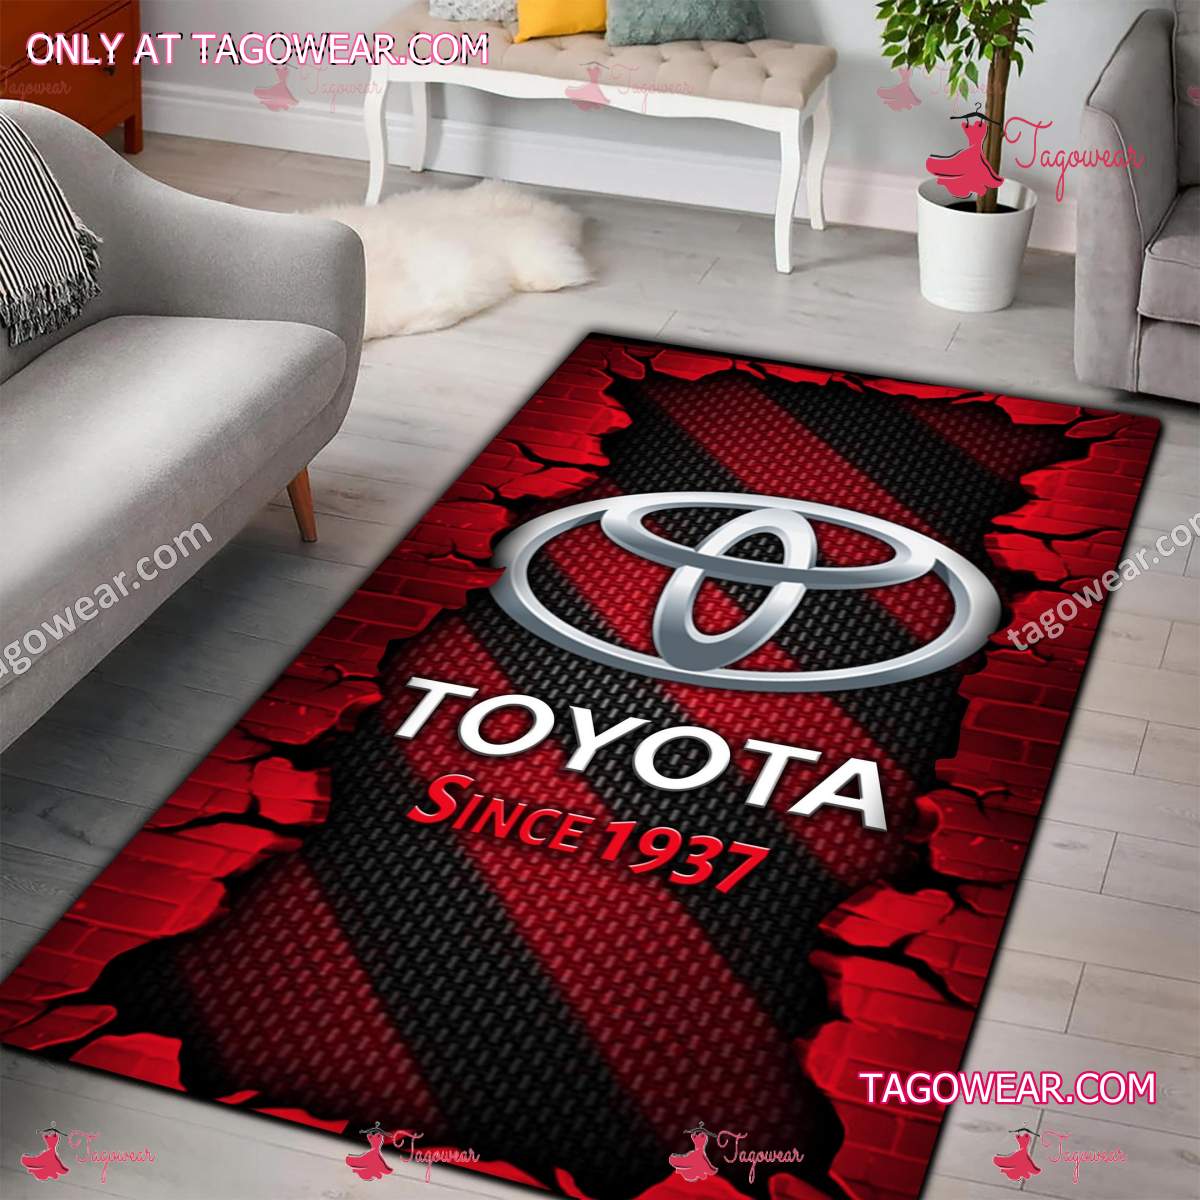 Toyota Since 1937 Rug Carpet